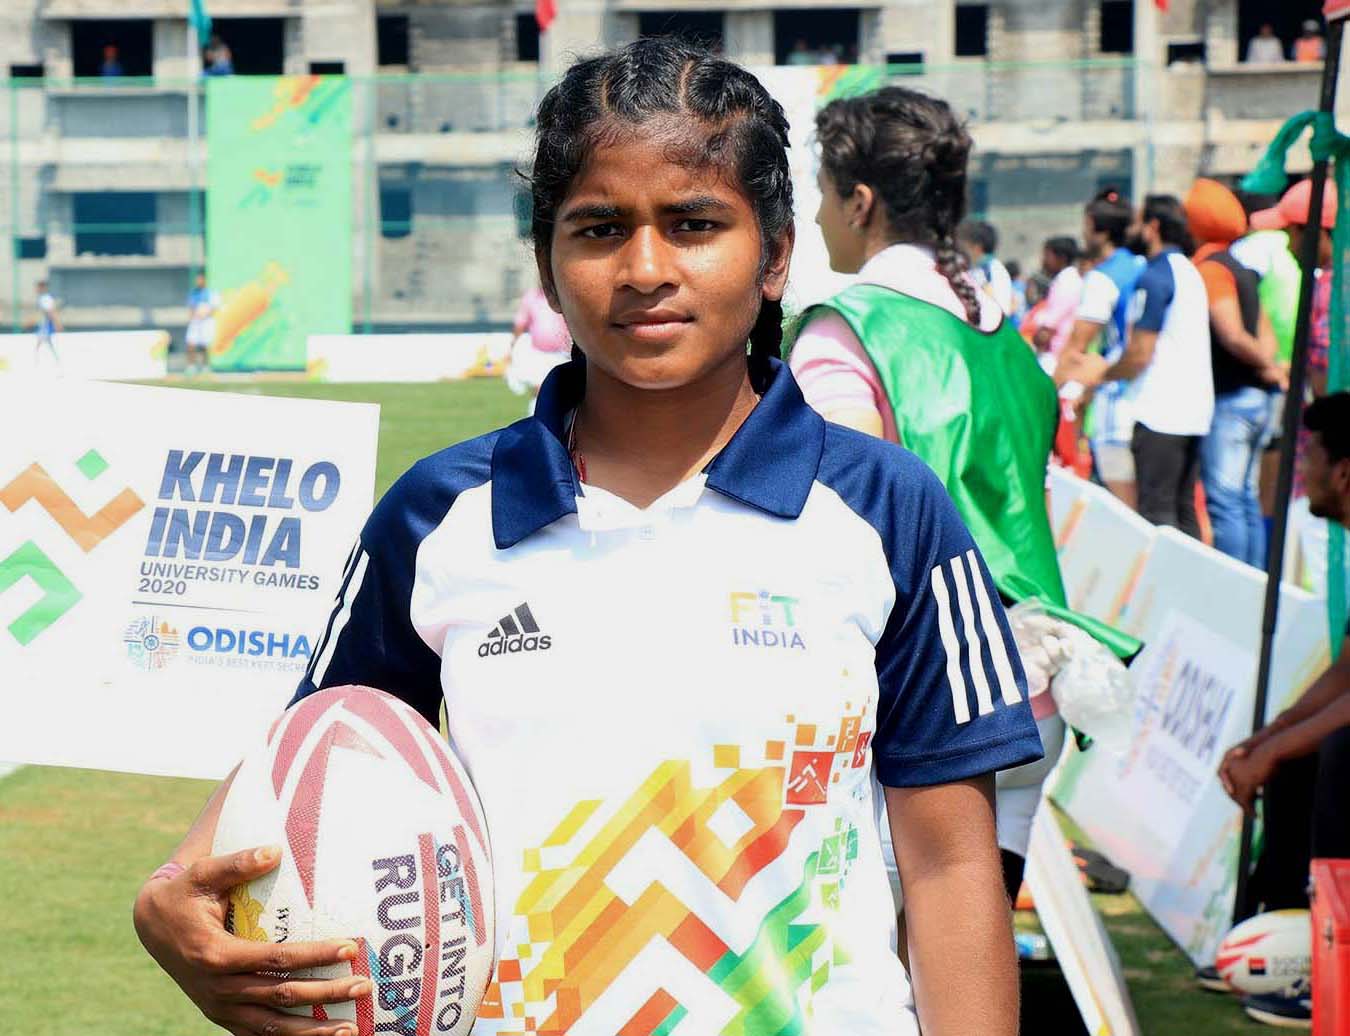 Odisha female rugby player Soni Mandangi at the Khelo India University Games in Bhubaneswar on 27 March, 2020.